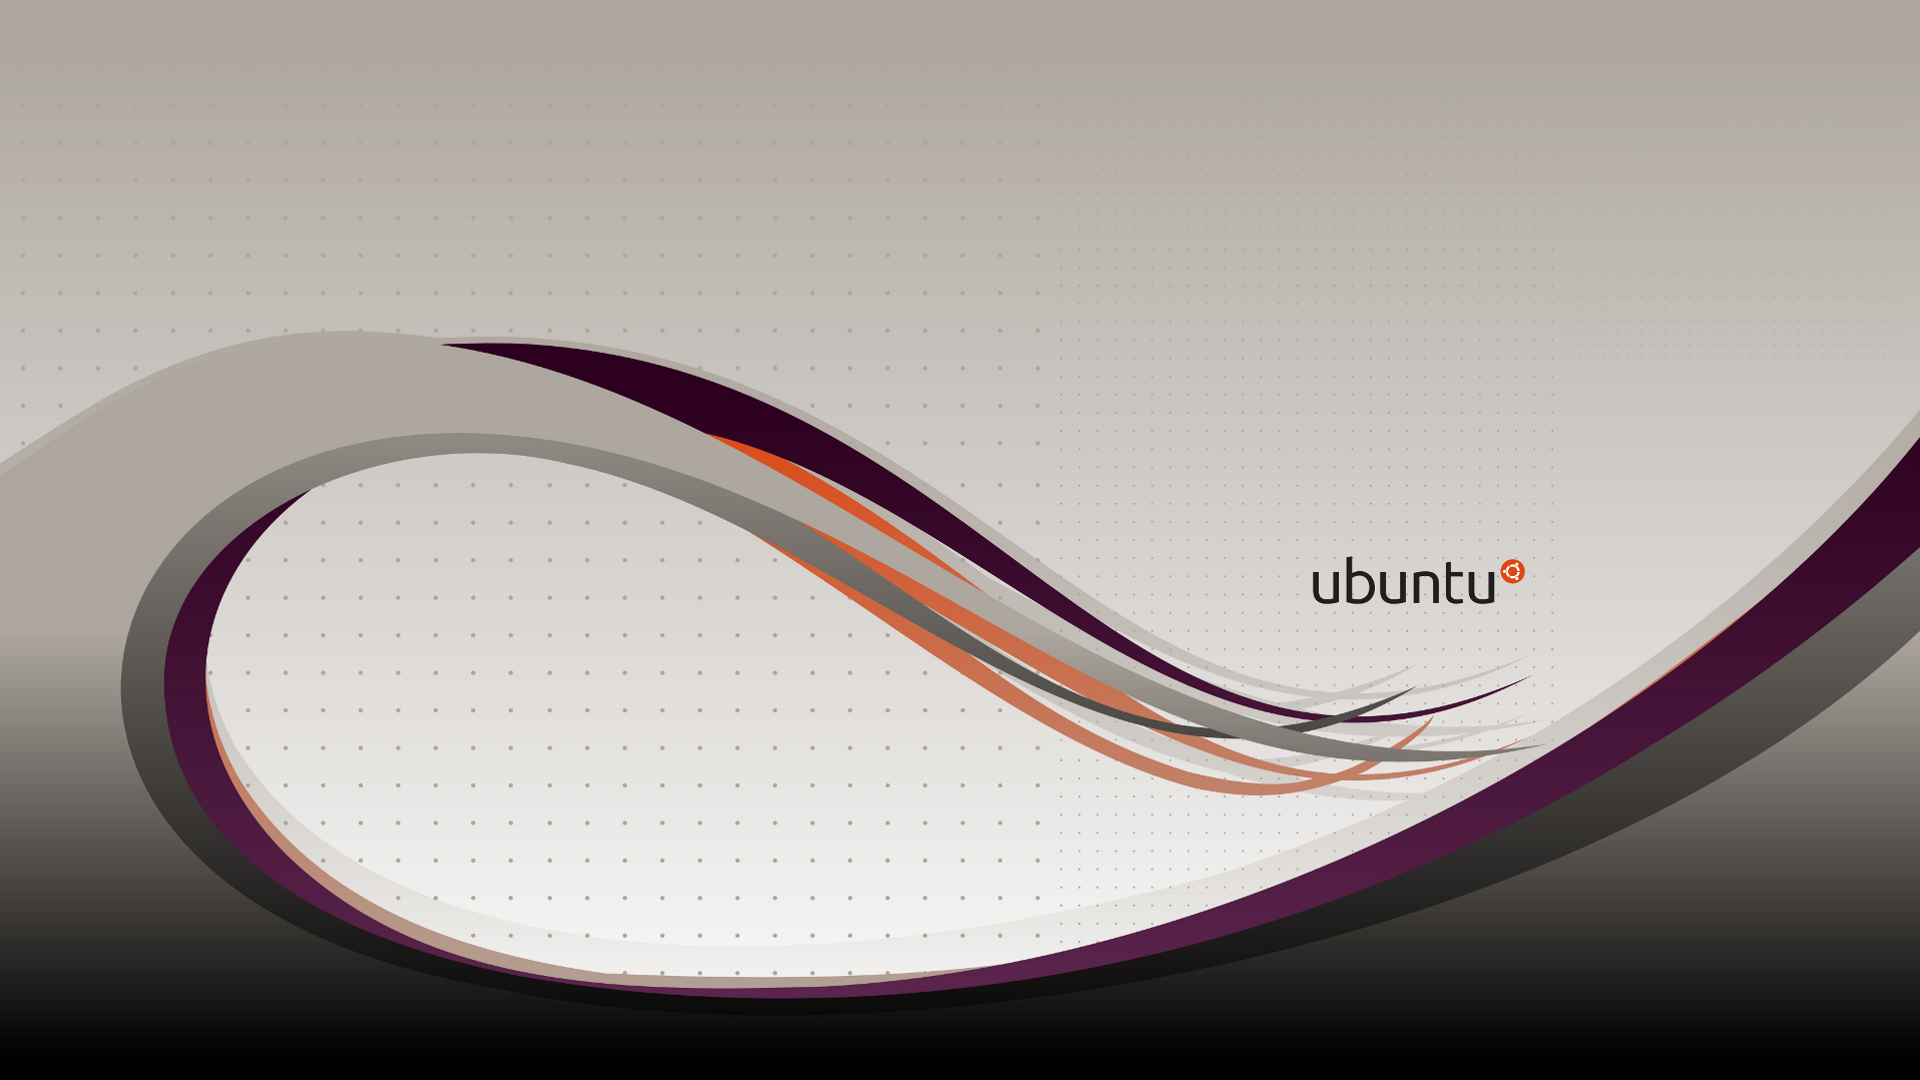 Ubuntu Abstract Vector Background   Wallpaper 334 1920x1080